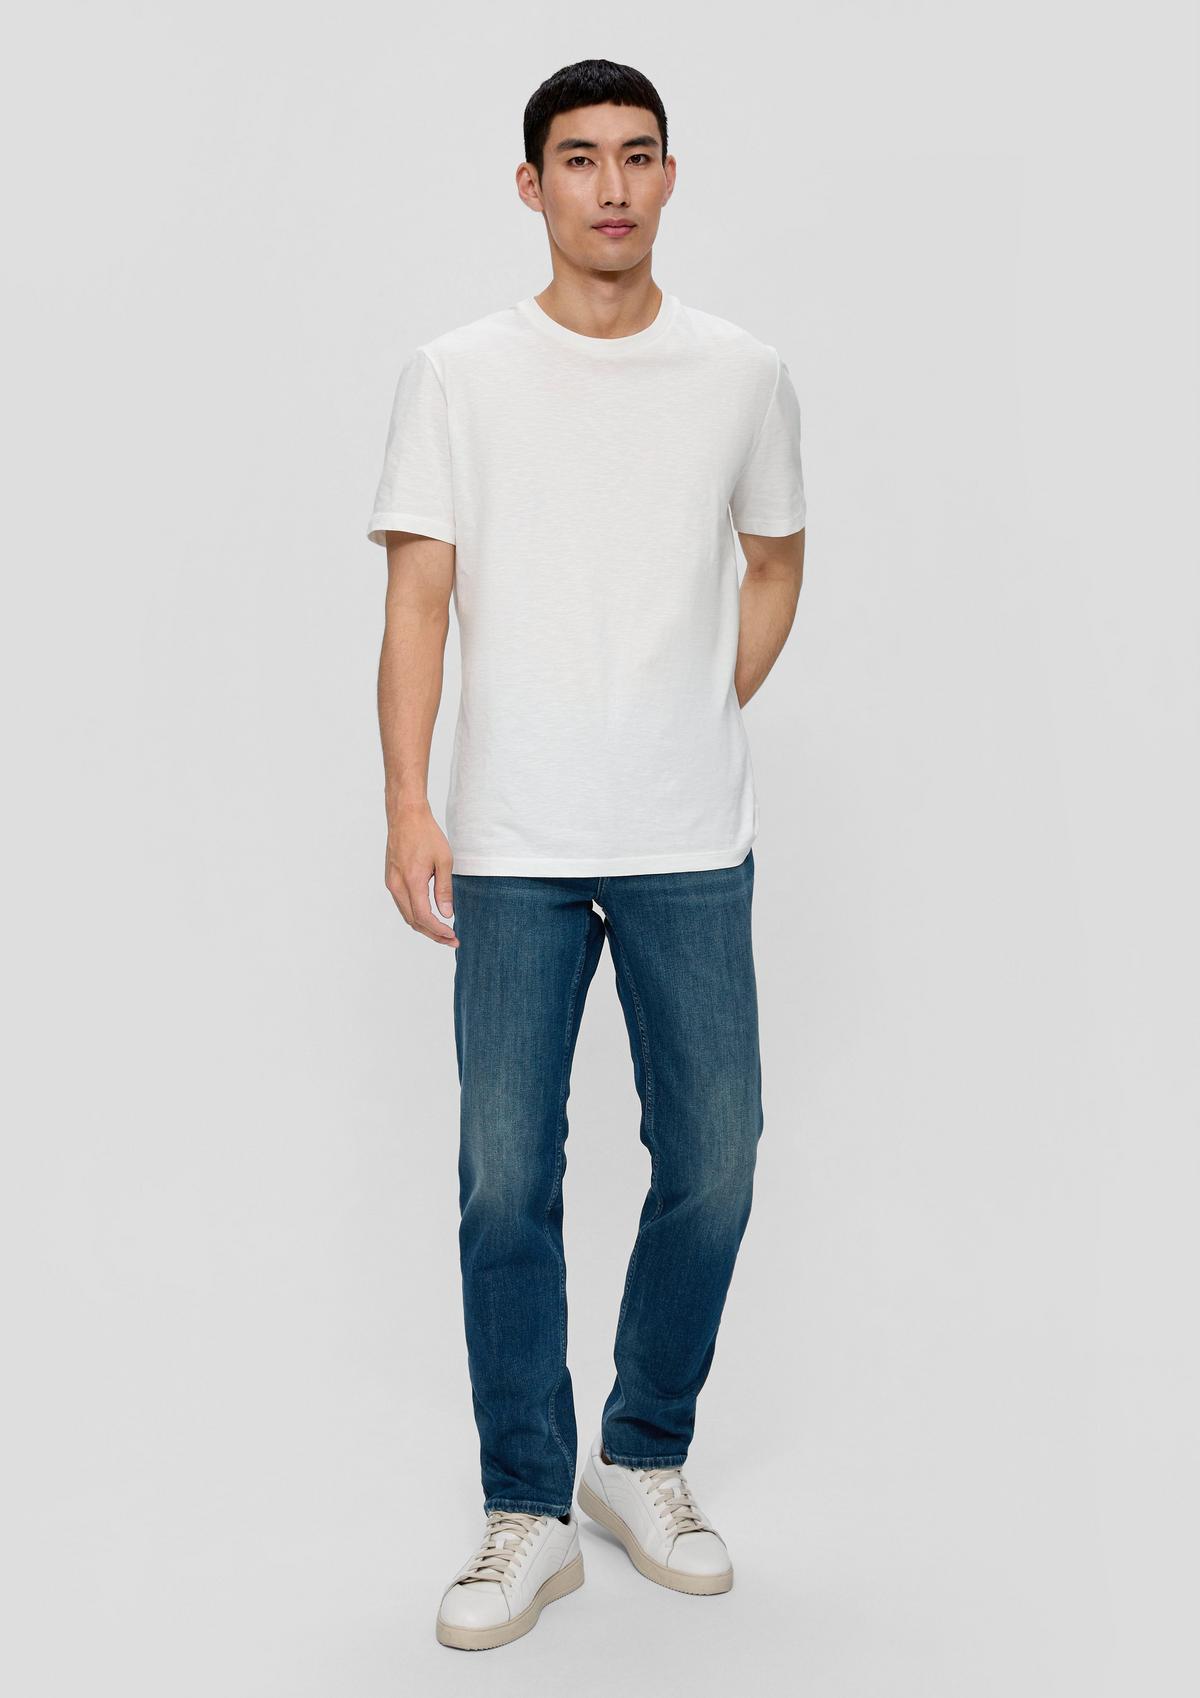 s.Oliver Nelio Jeans / Slim Fit / Mid Rise / Slim Leg / Stretch Cotton